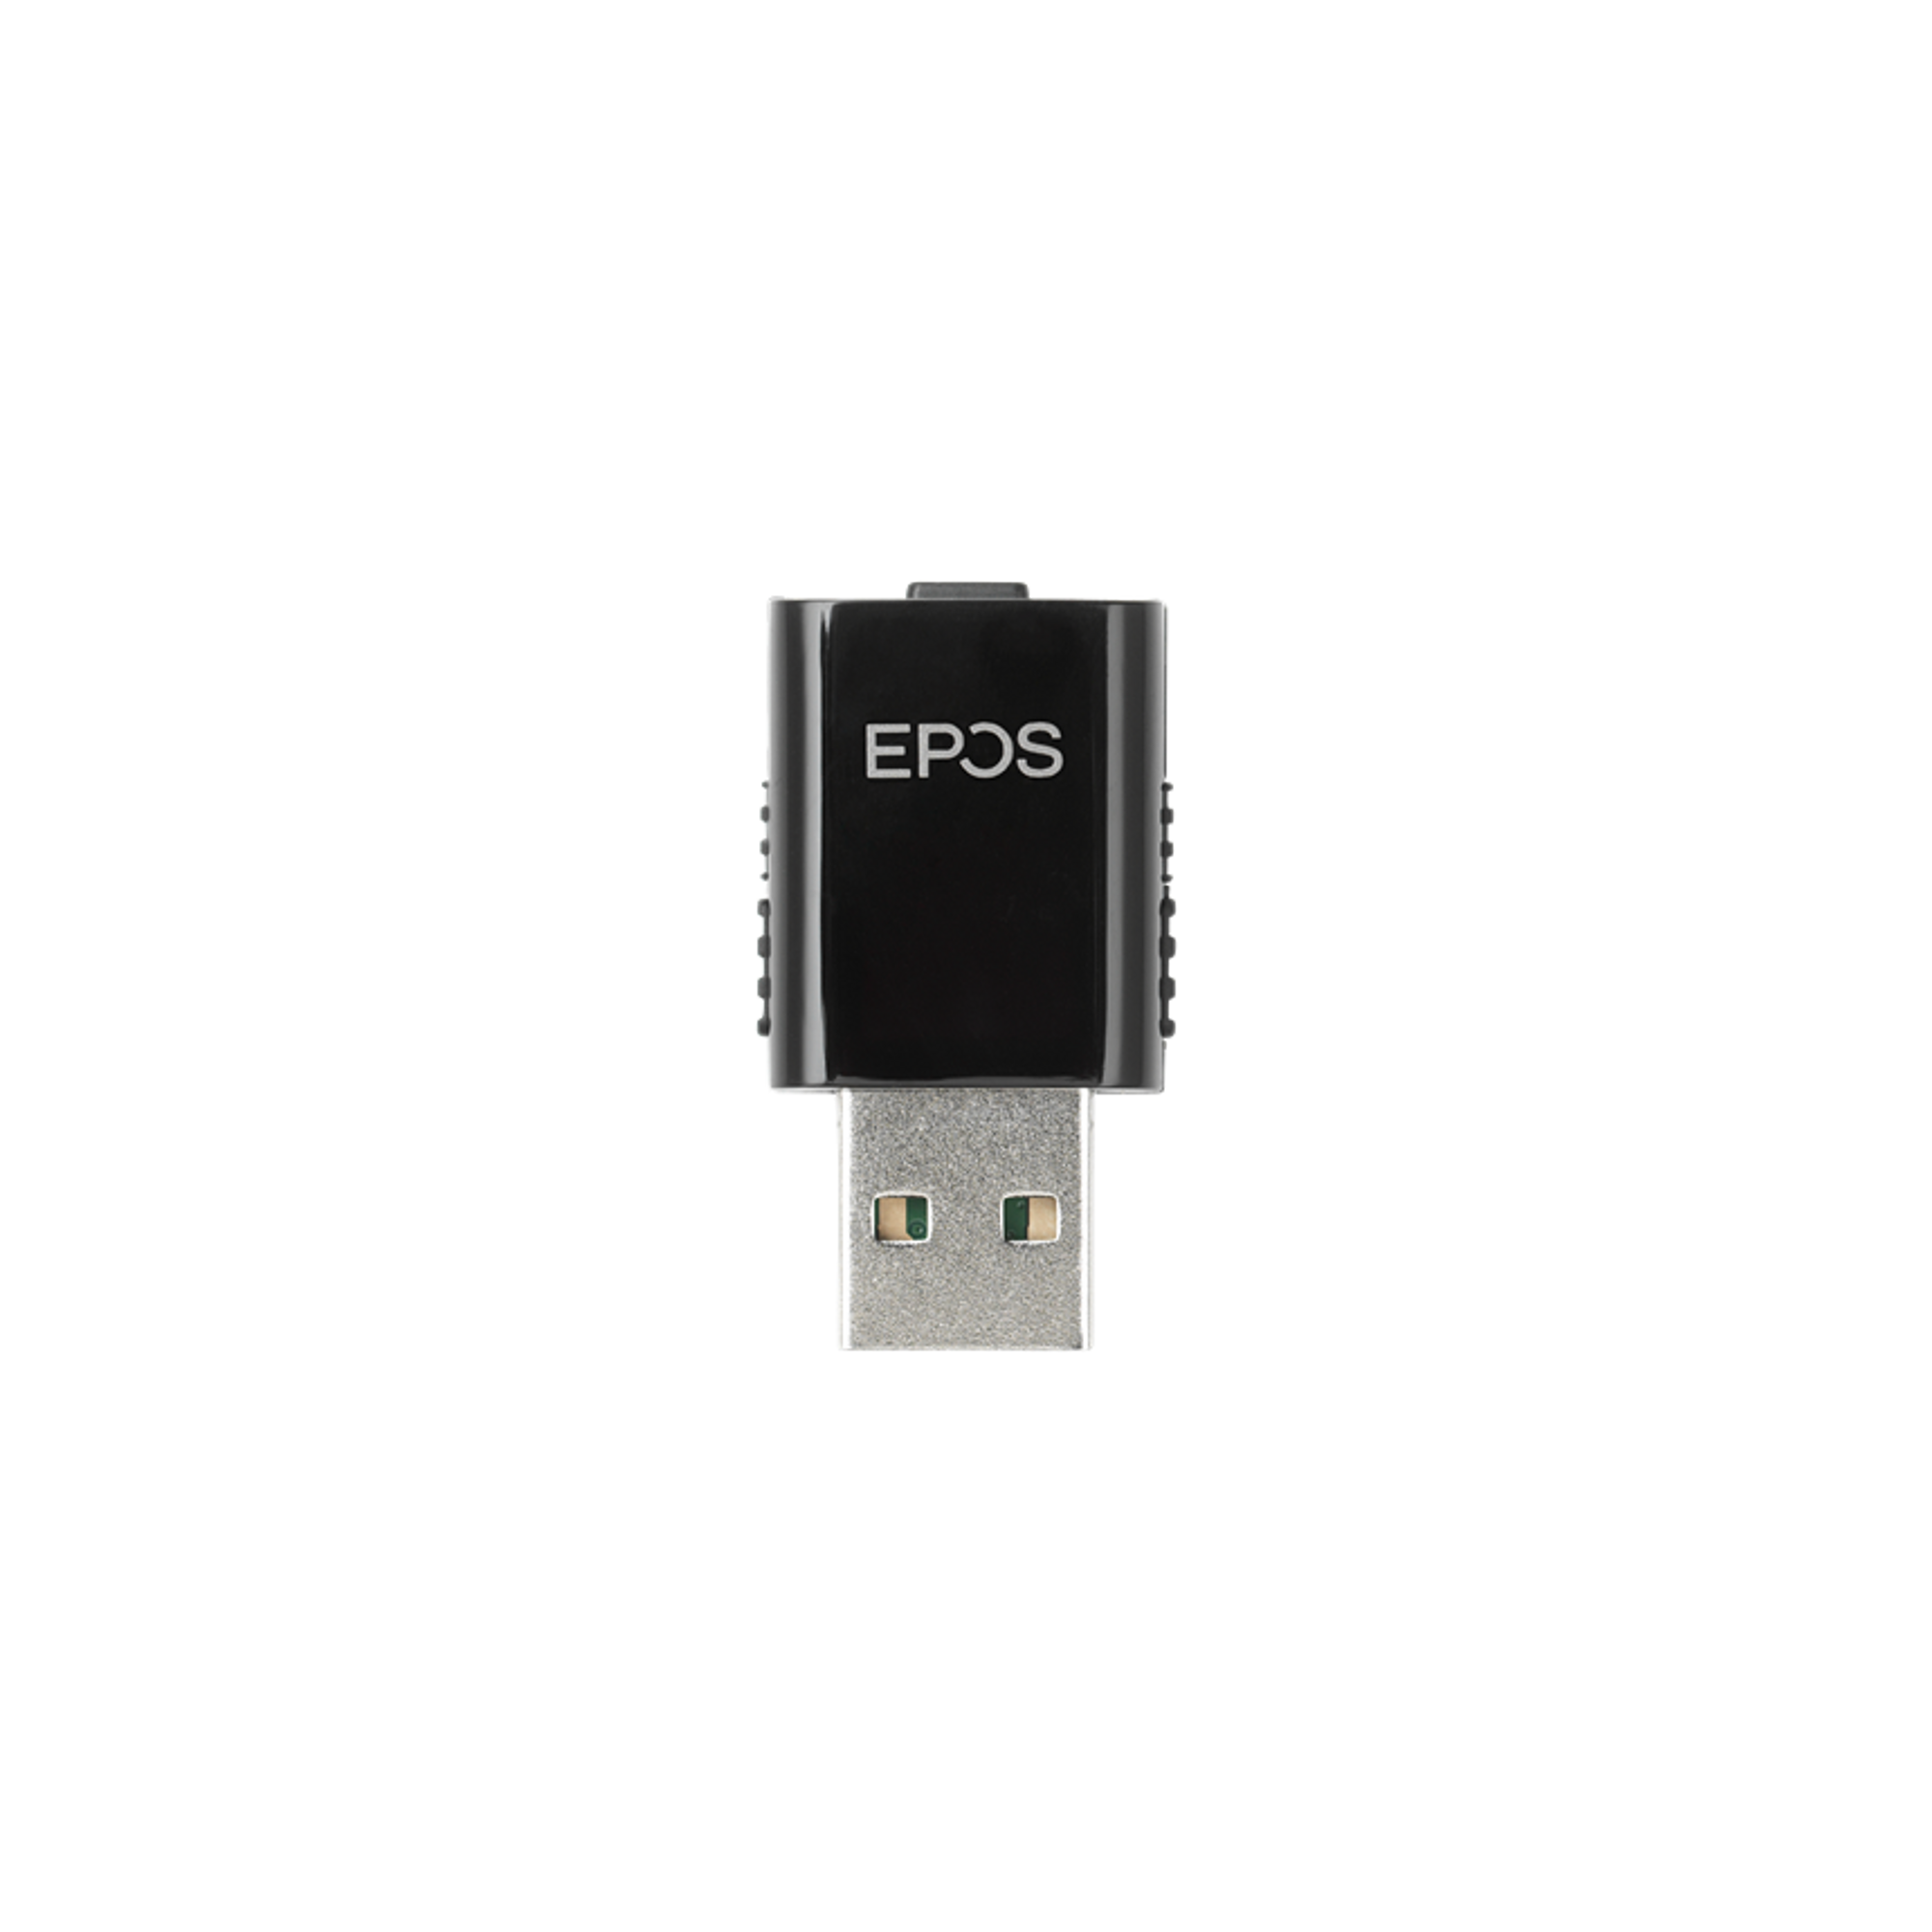 EPOS Sennheiser Headsets | Sennheiser Bluetooth Dongle | EPOS Singapore | EPOS Sennheiser BTD 800 USB Bluetooth Dongle, USB-A